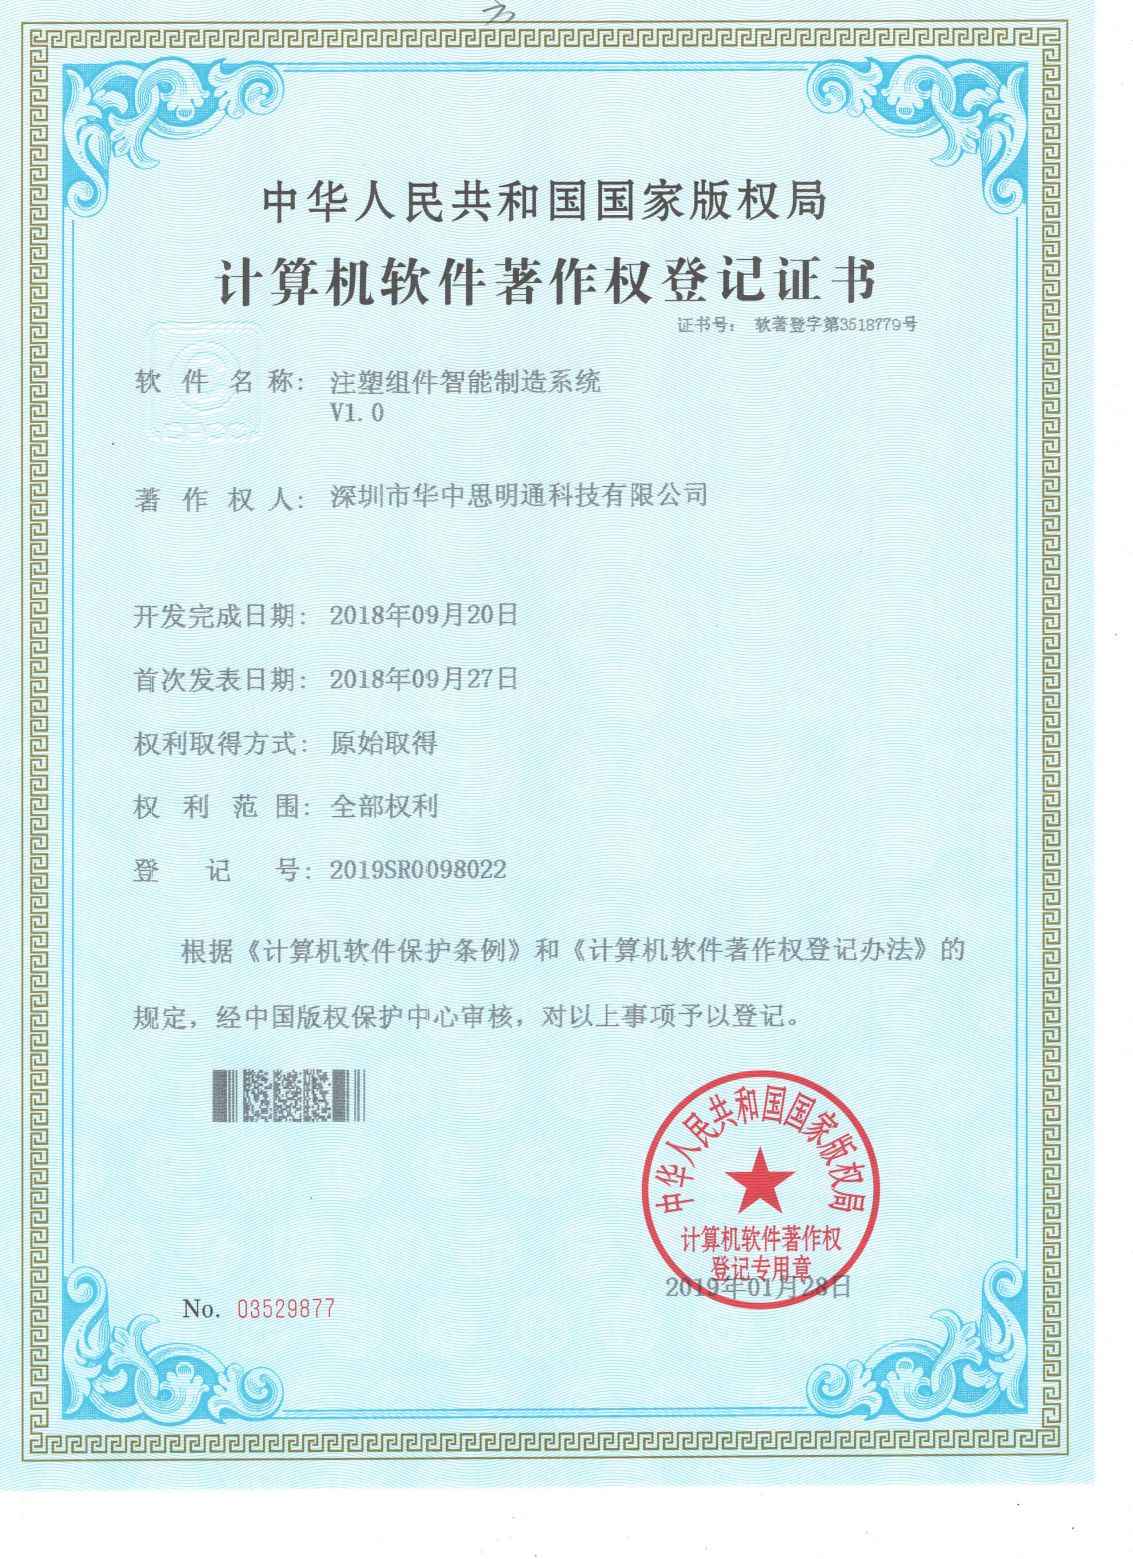 Software copyright registration certificate-02